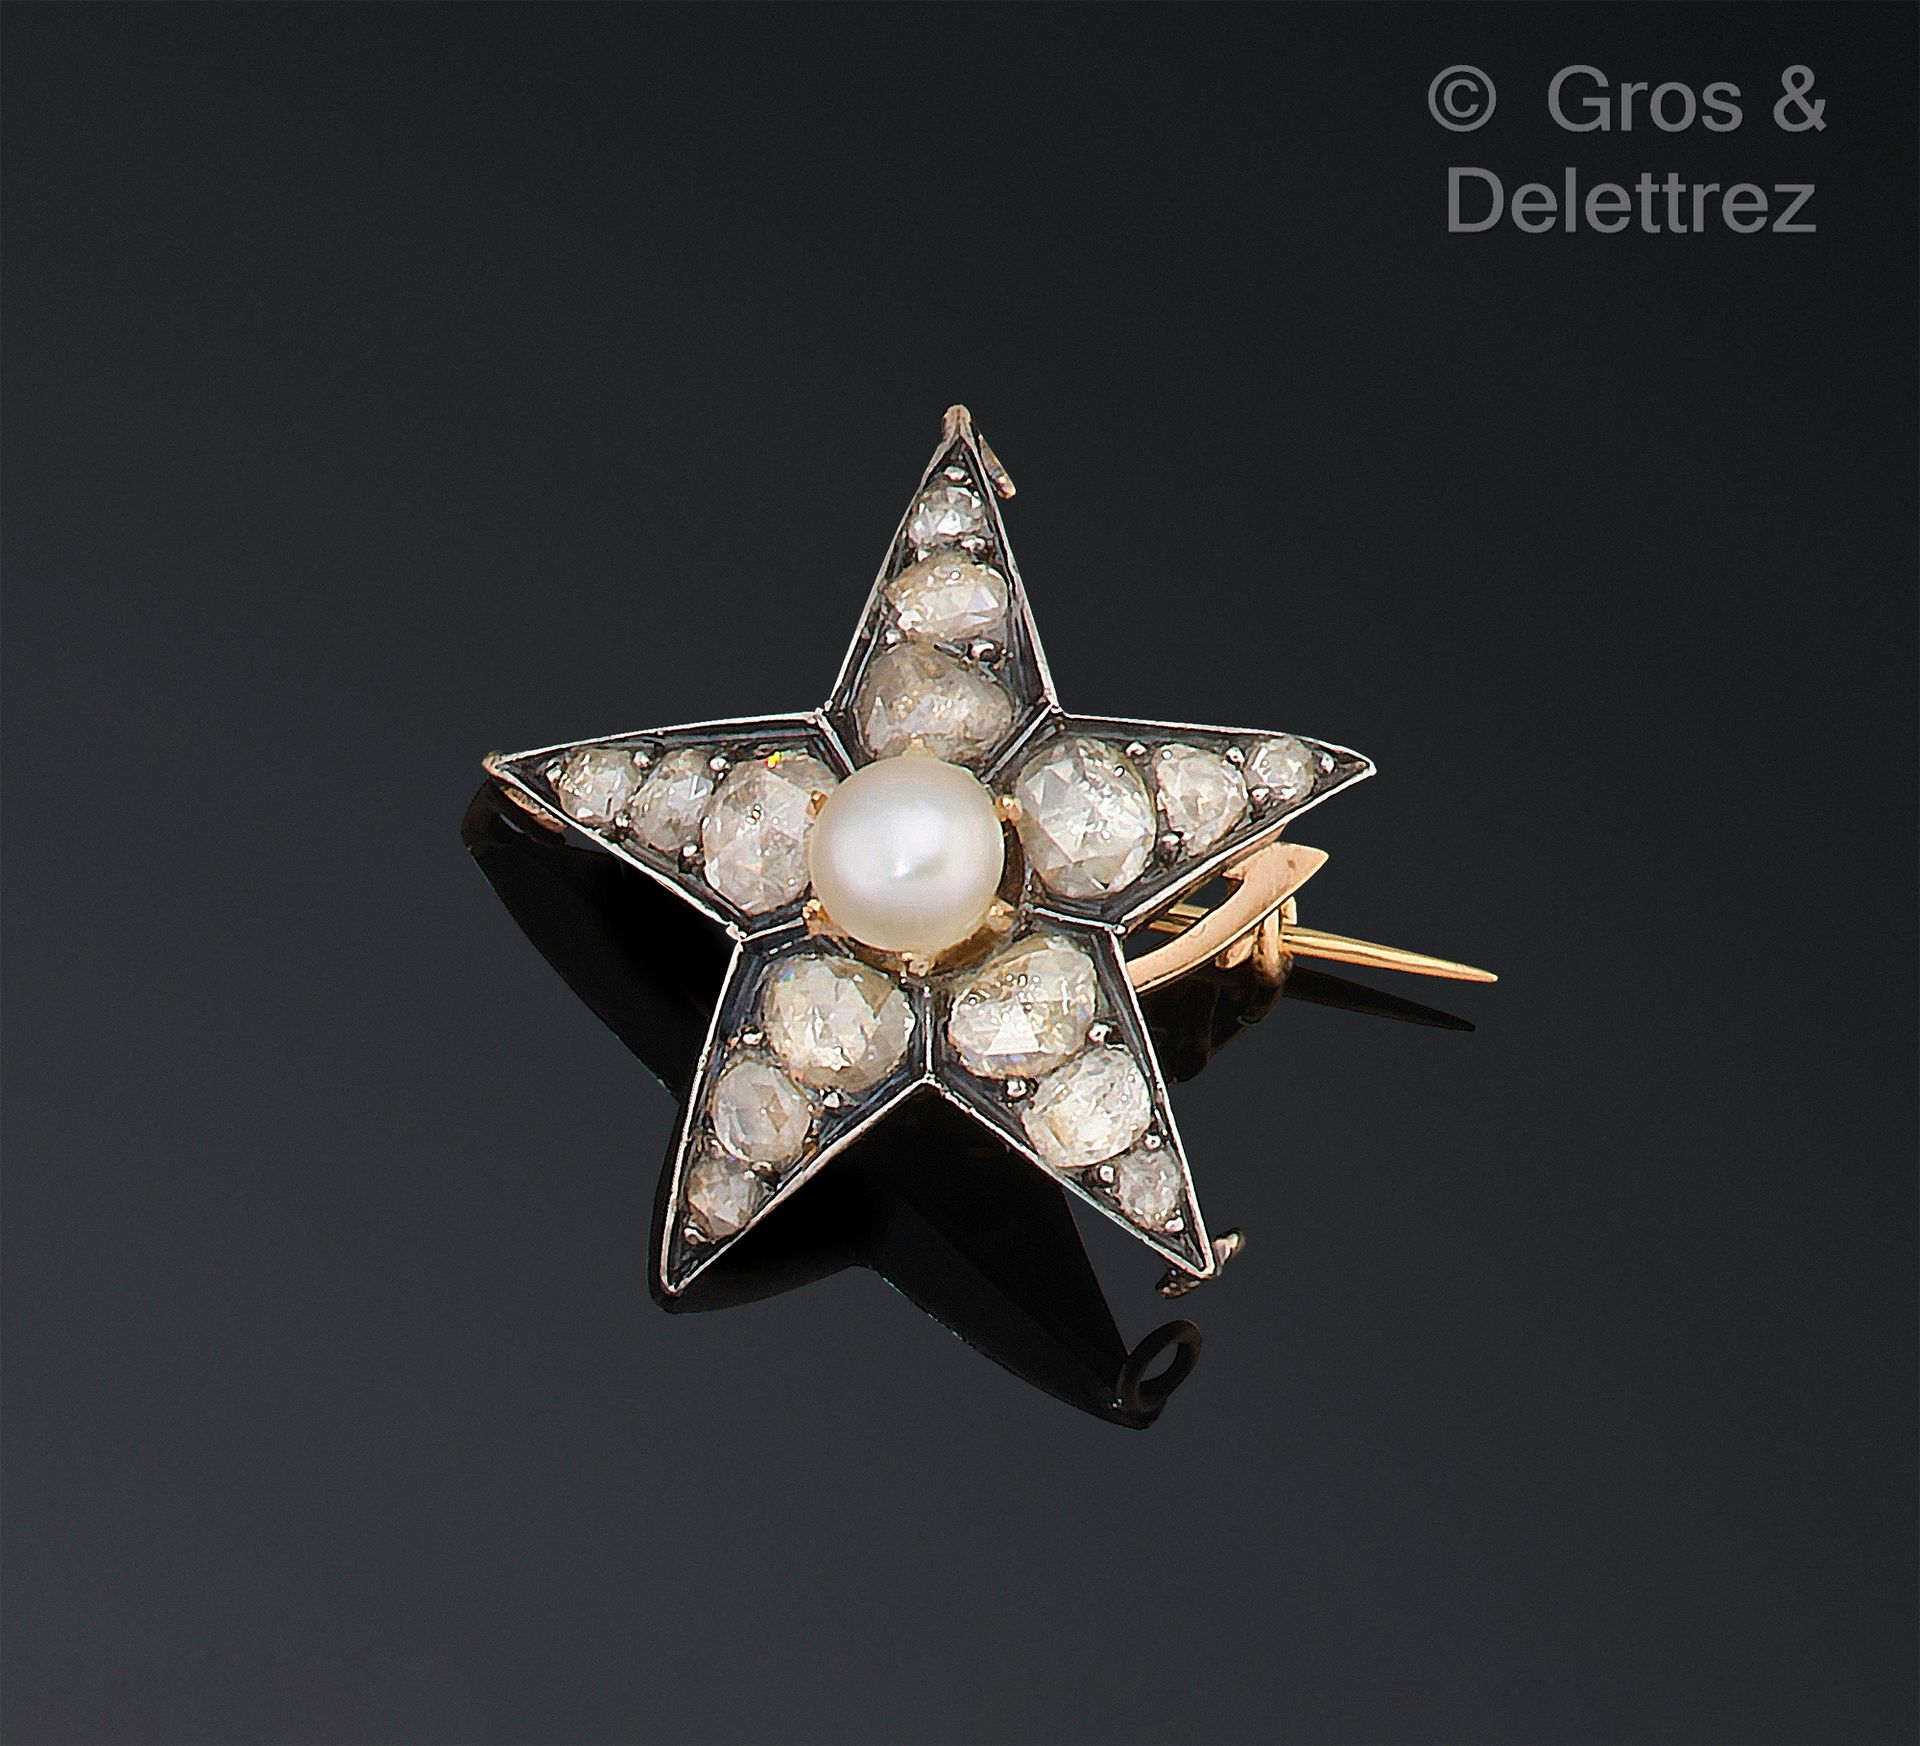 Null 胸针 "星"，银质80万分之一和黄金75万分之一，镶嵌玫瑰式切割钻石，上面有一颗白色养殖珍珠。尺寸：2.5x2.5厘米。毛重：6克。